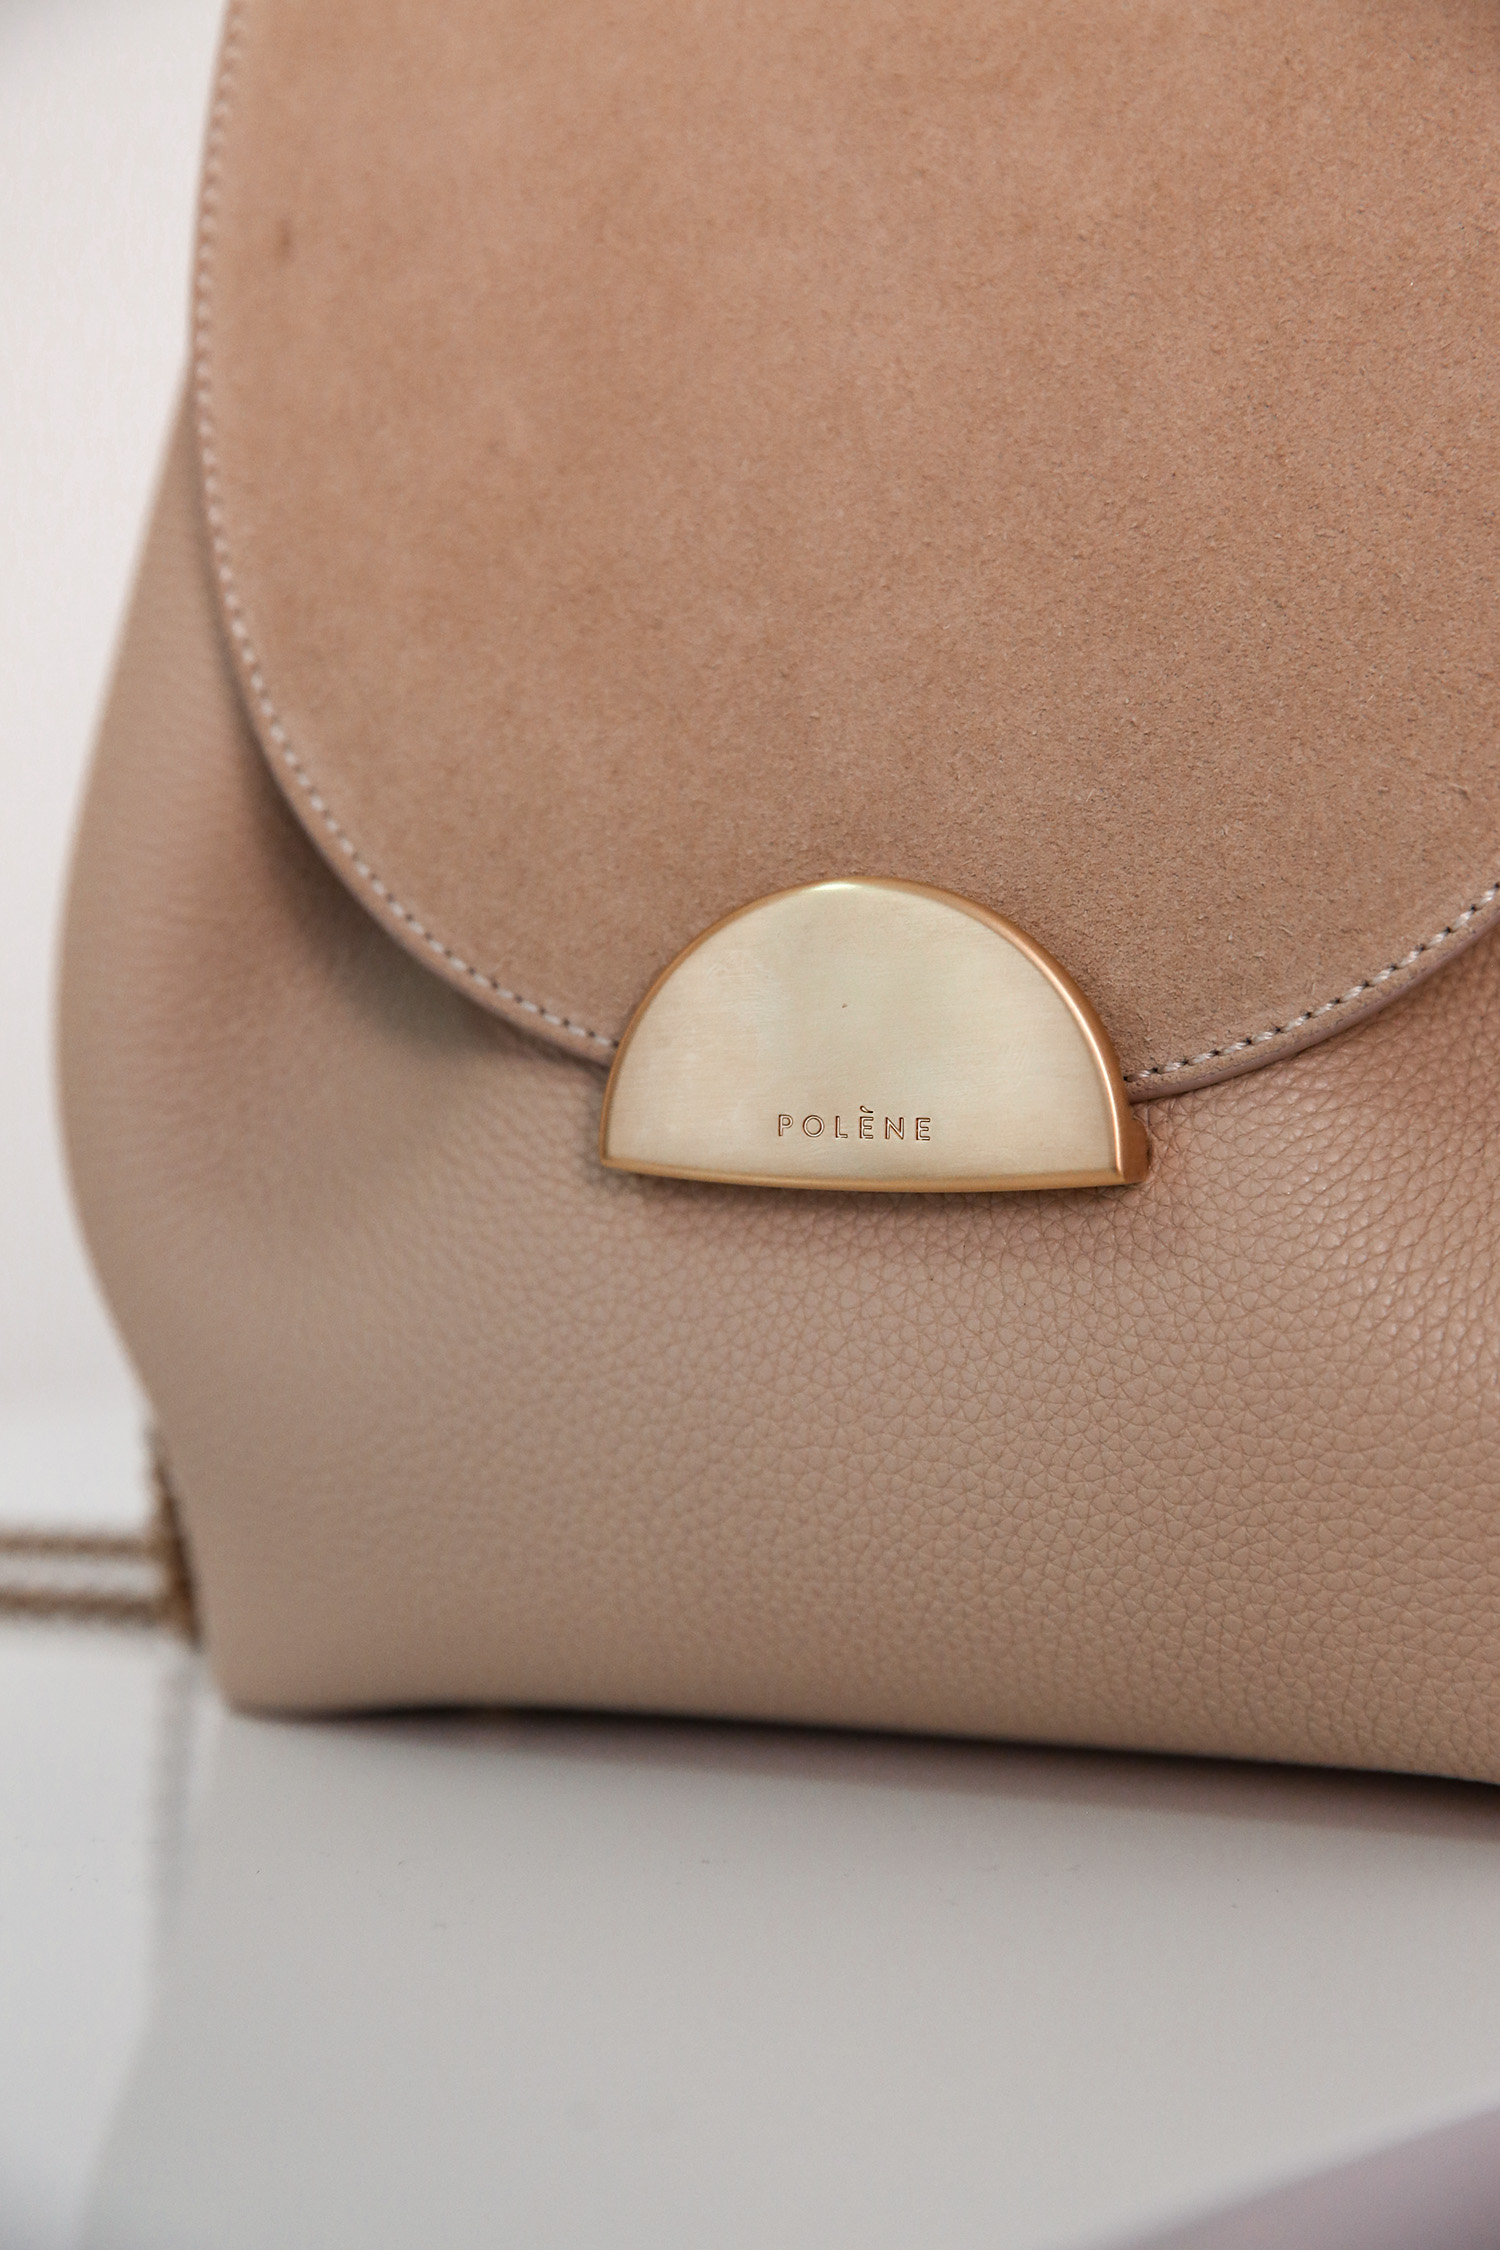 Polene Number One Mini Bag Review - Mademoiselle